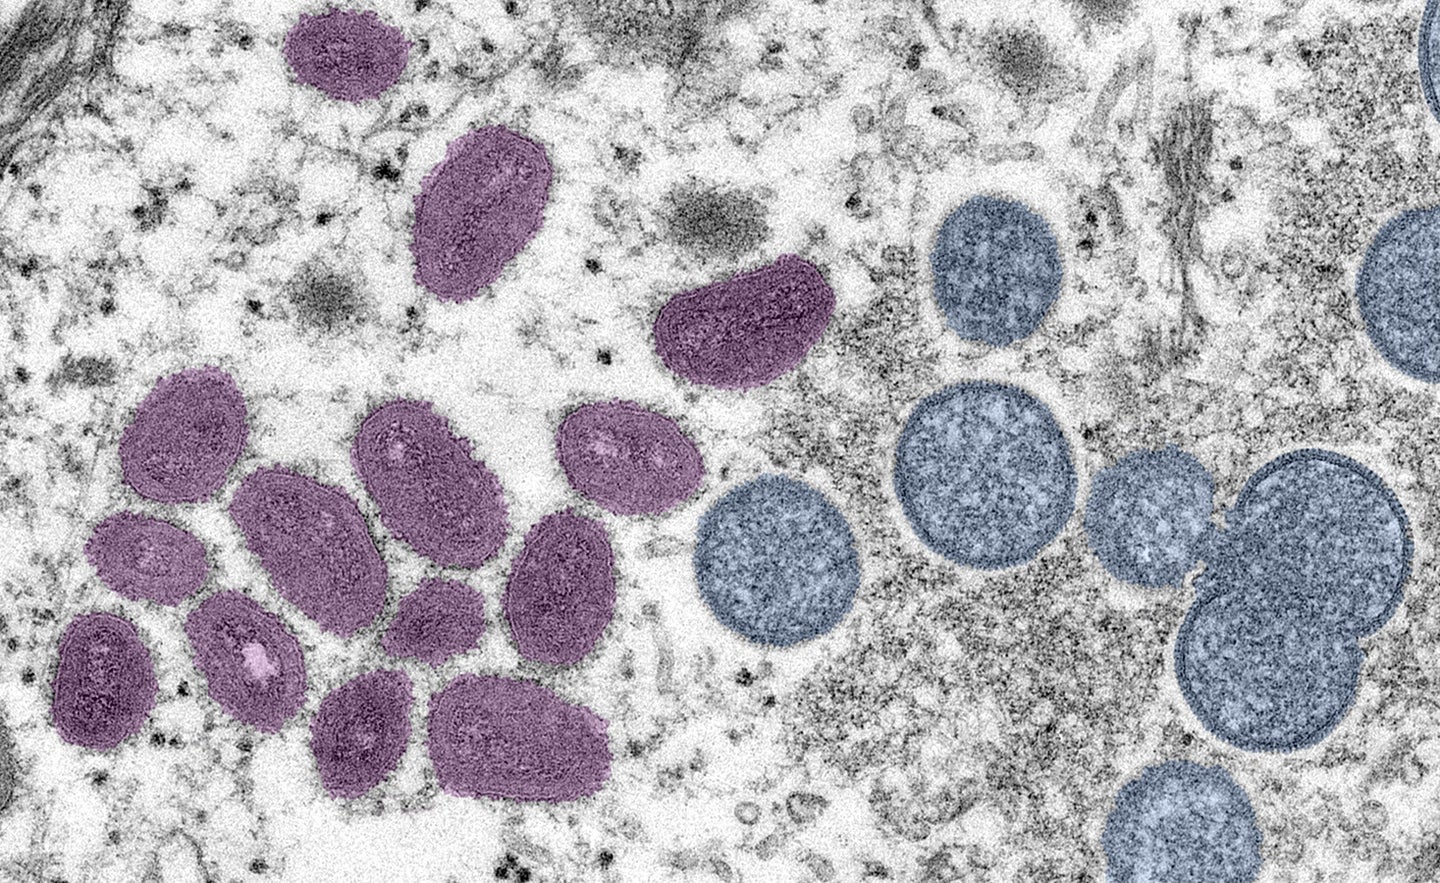 Clinical sample of the monkeypox virus.